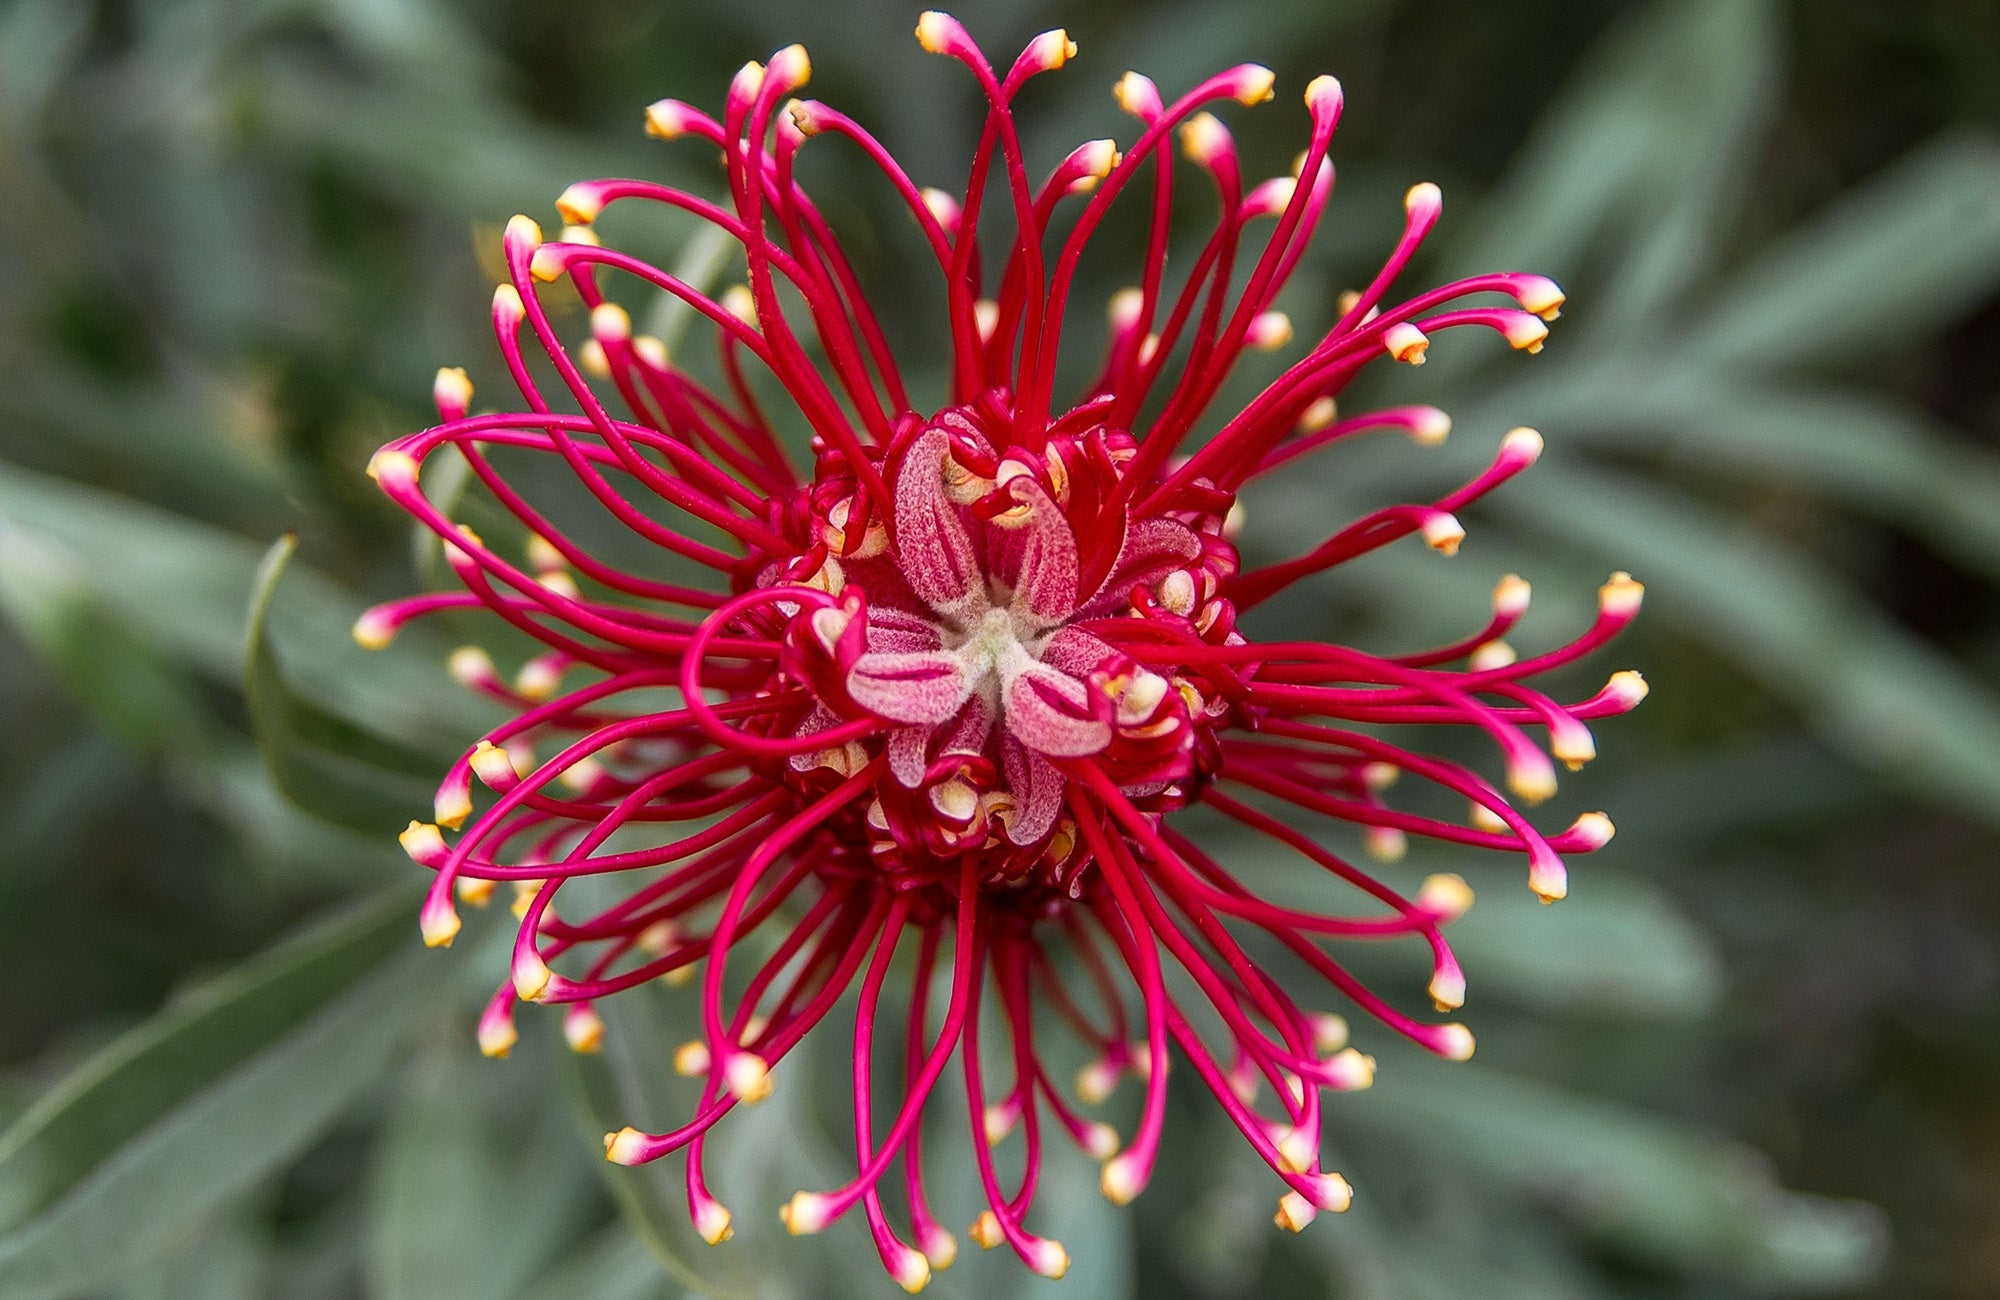 Grevillea Flower Close Up